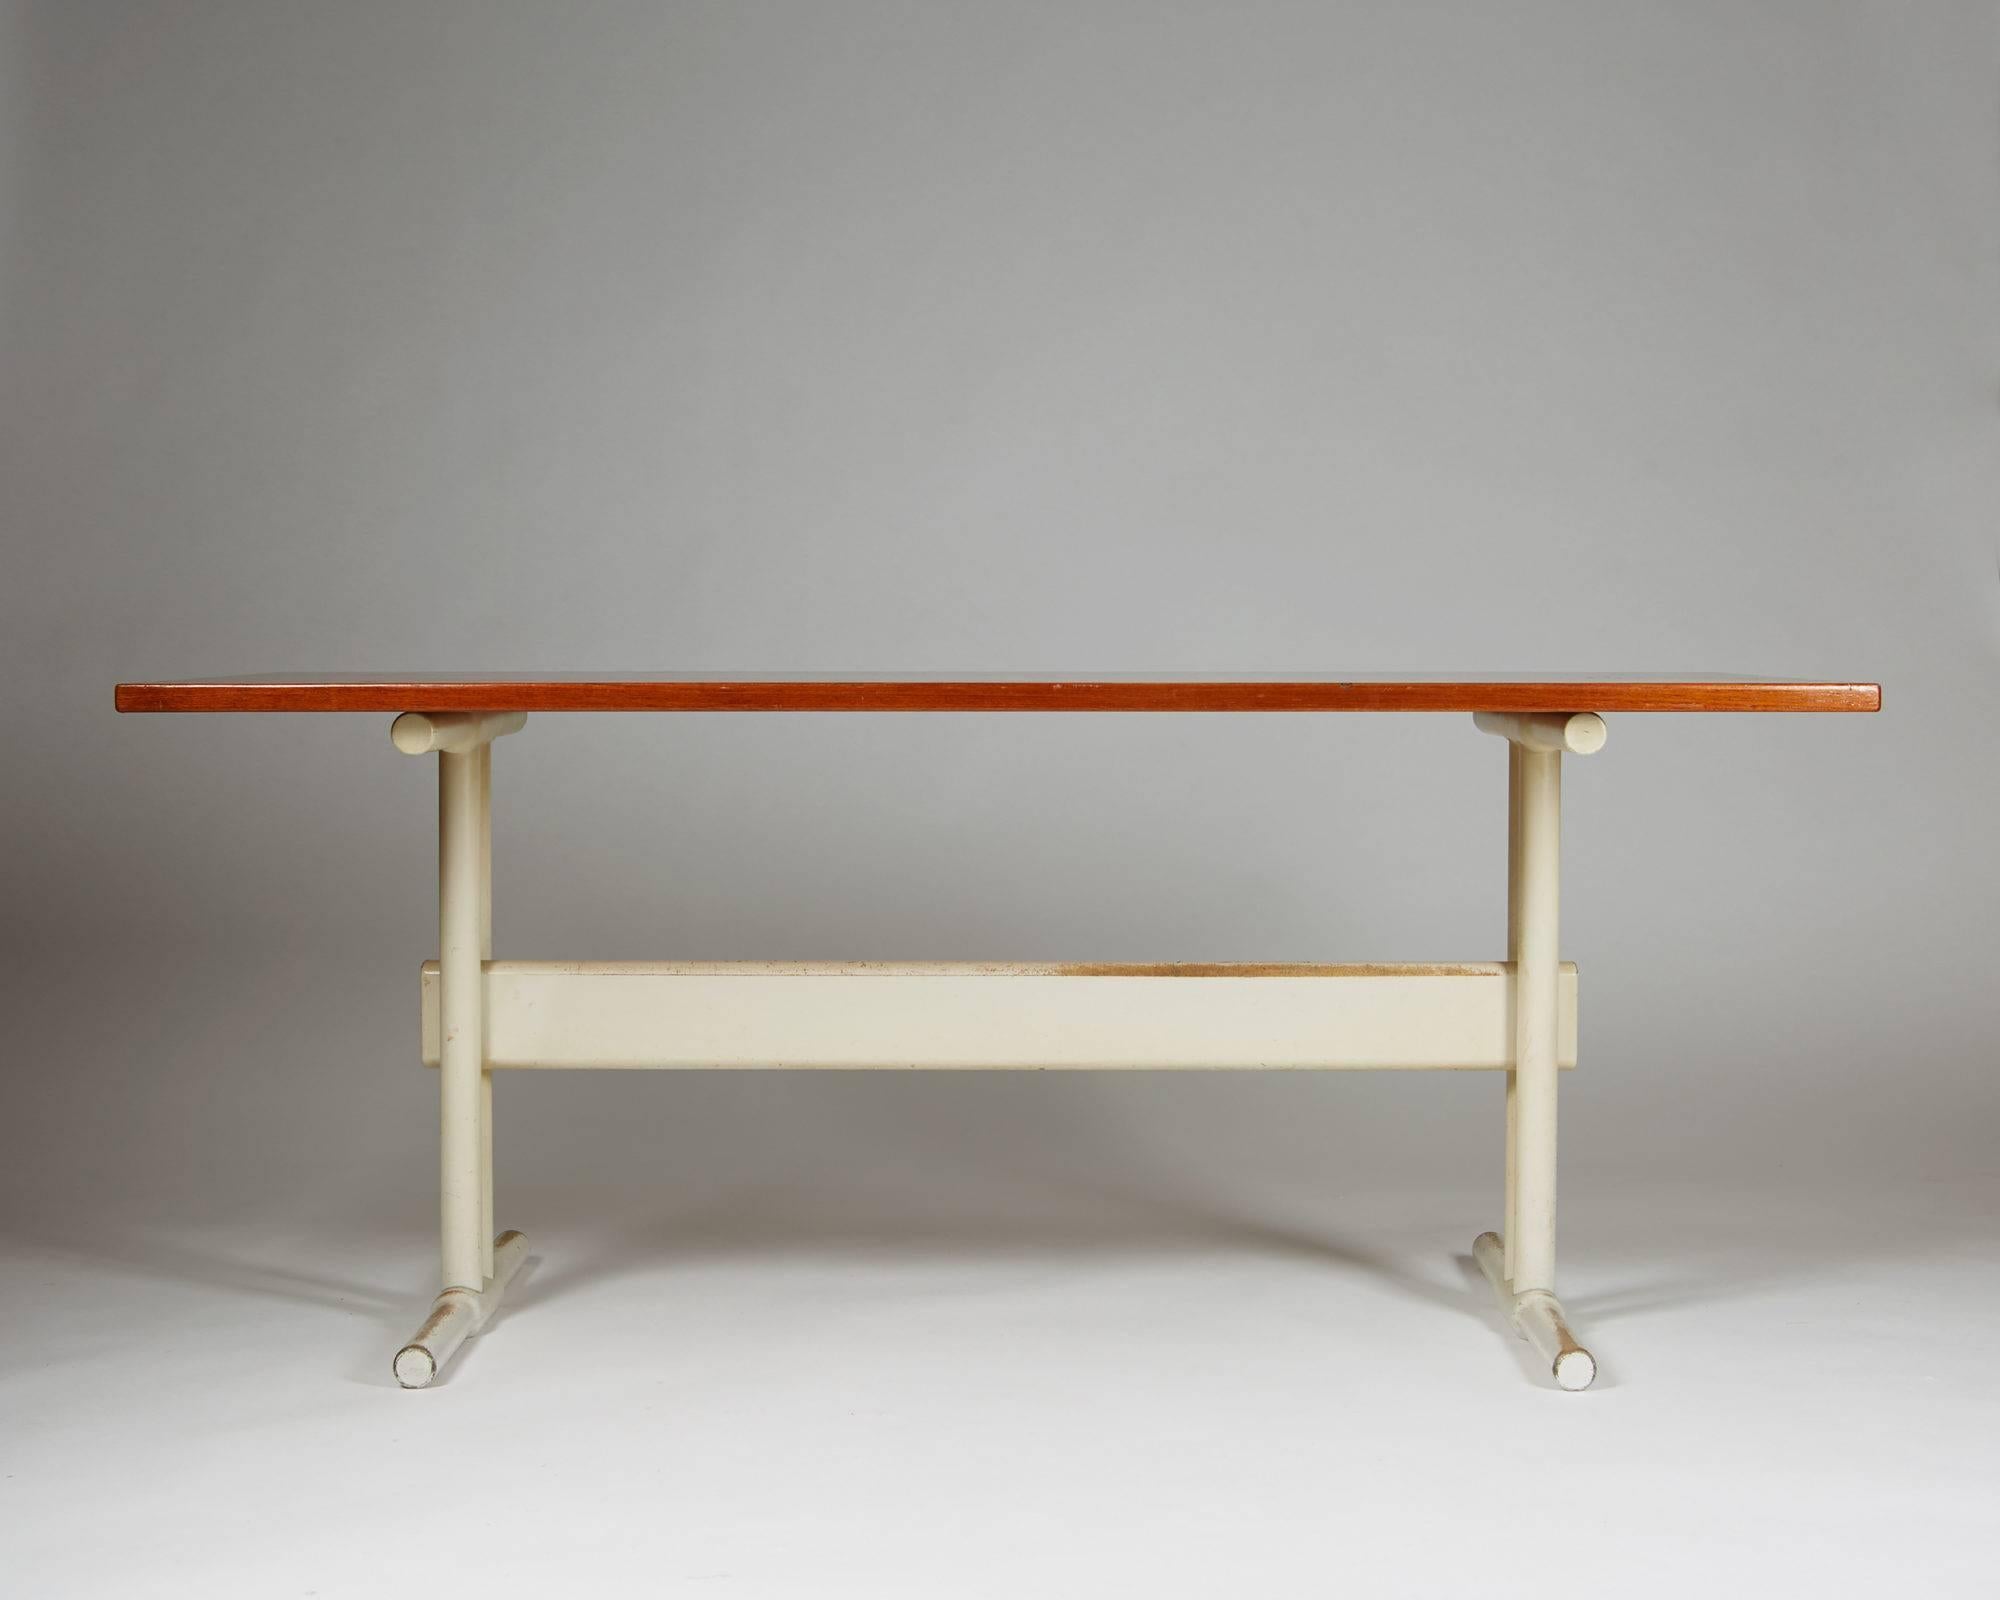 Desk/dining table, anonymous, Denmark, 1950s.
Teak top with lacqured wood base.

H: 72 cm/ 28 1/2''
L: 175 cm/ 5' 9''
D: 75 cm/ 29 1/2''.